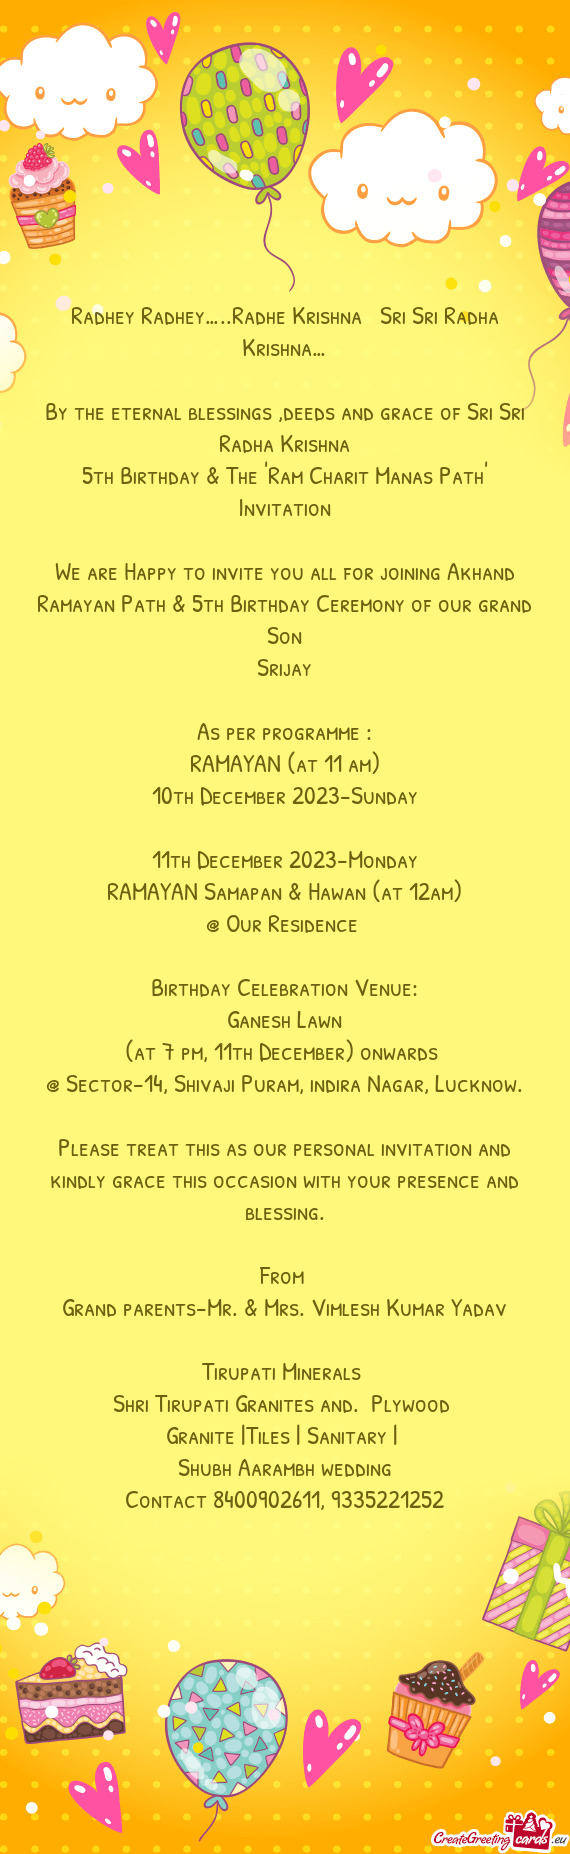 5th Birthday & The "Ram Charit Manas Path" Invitation